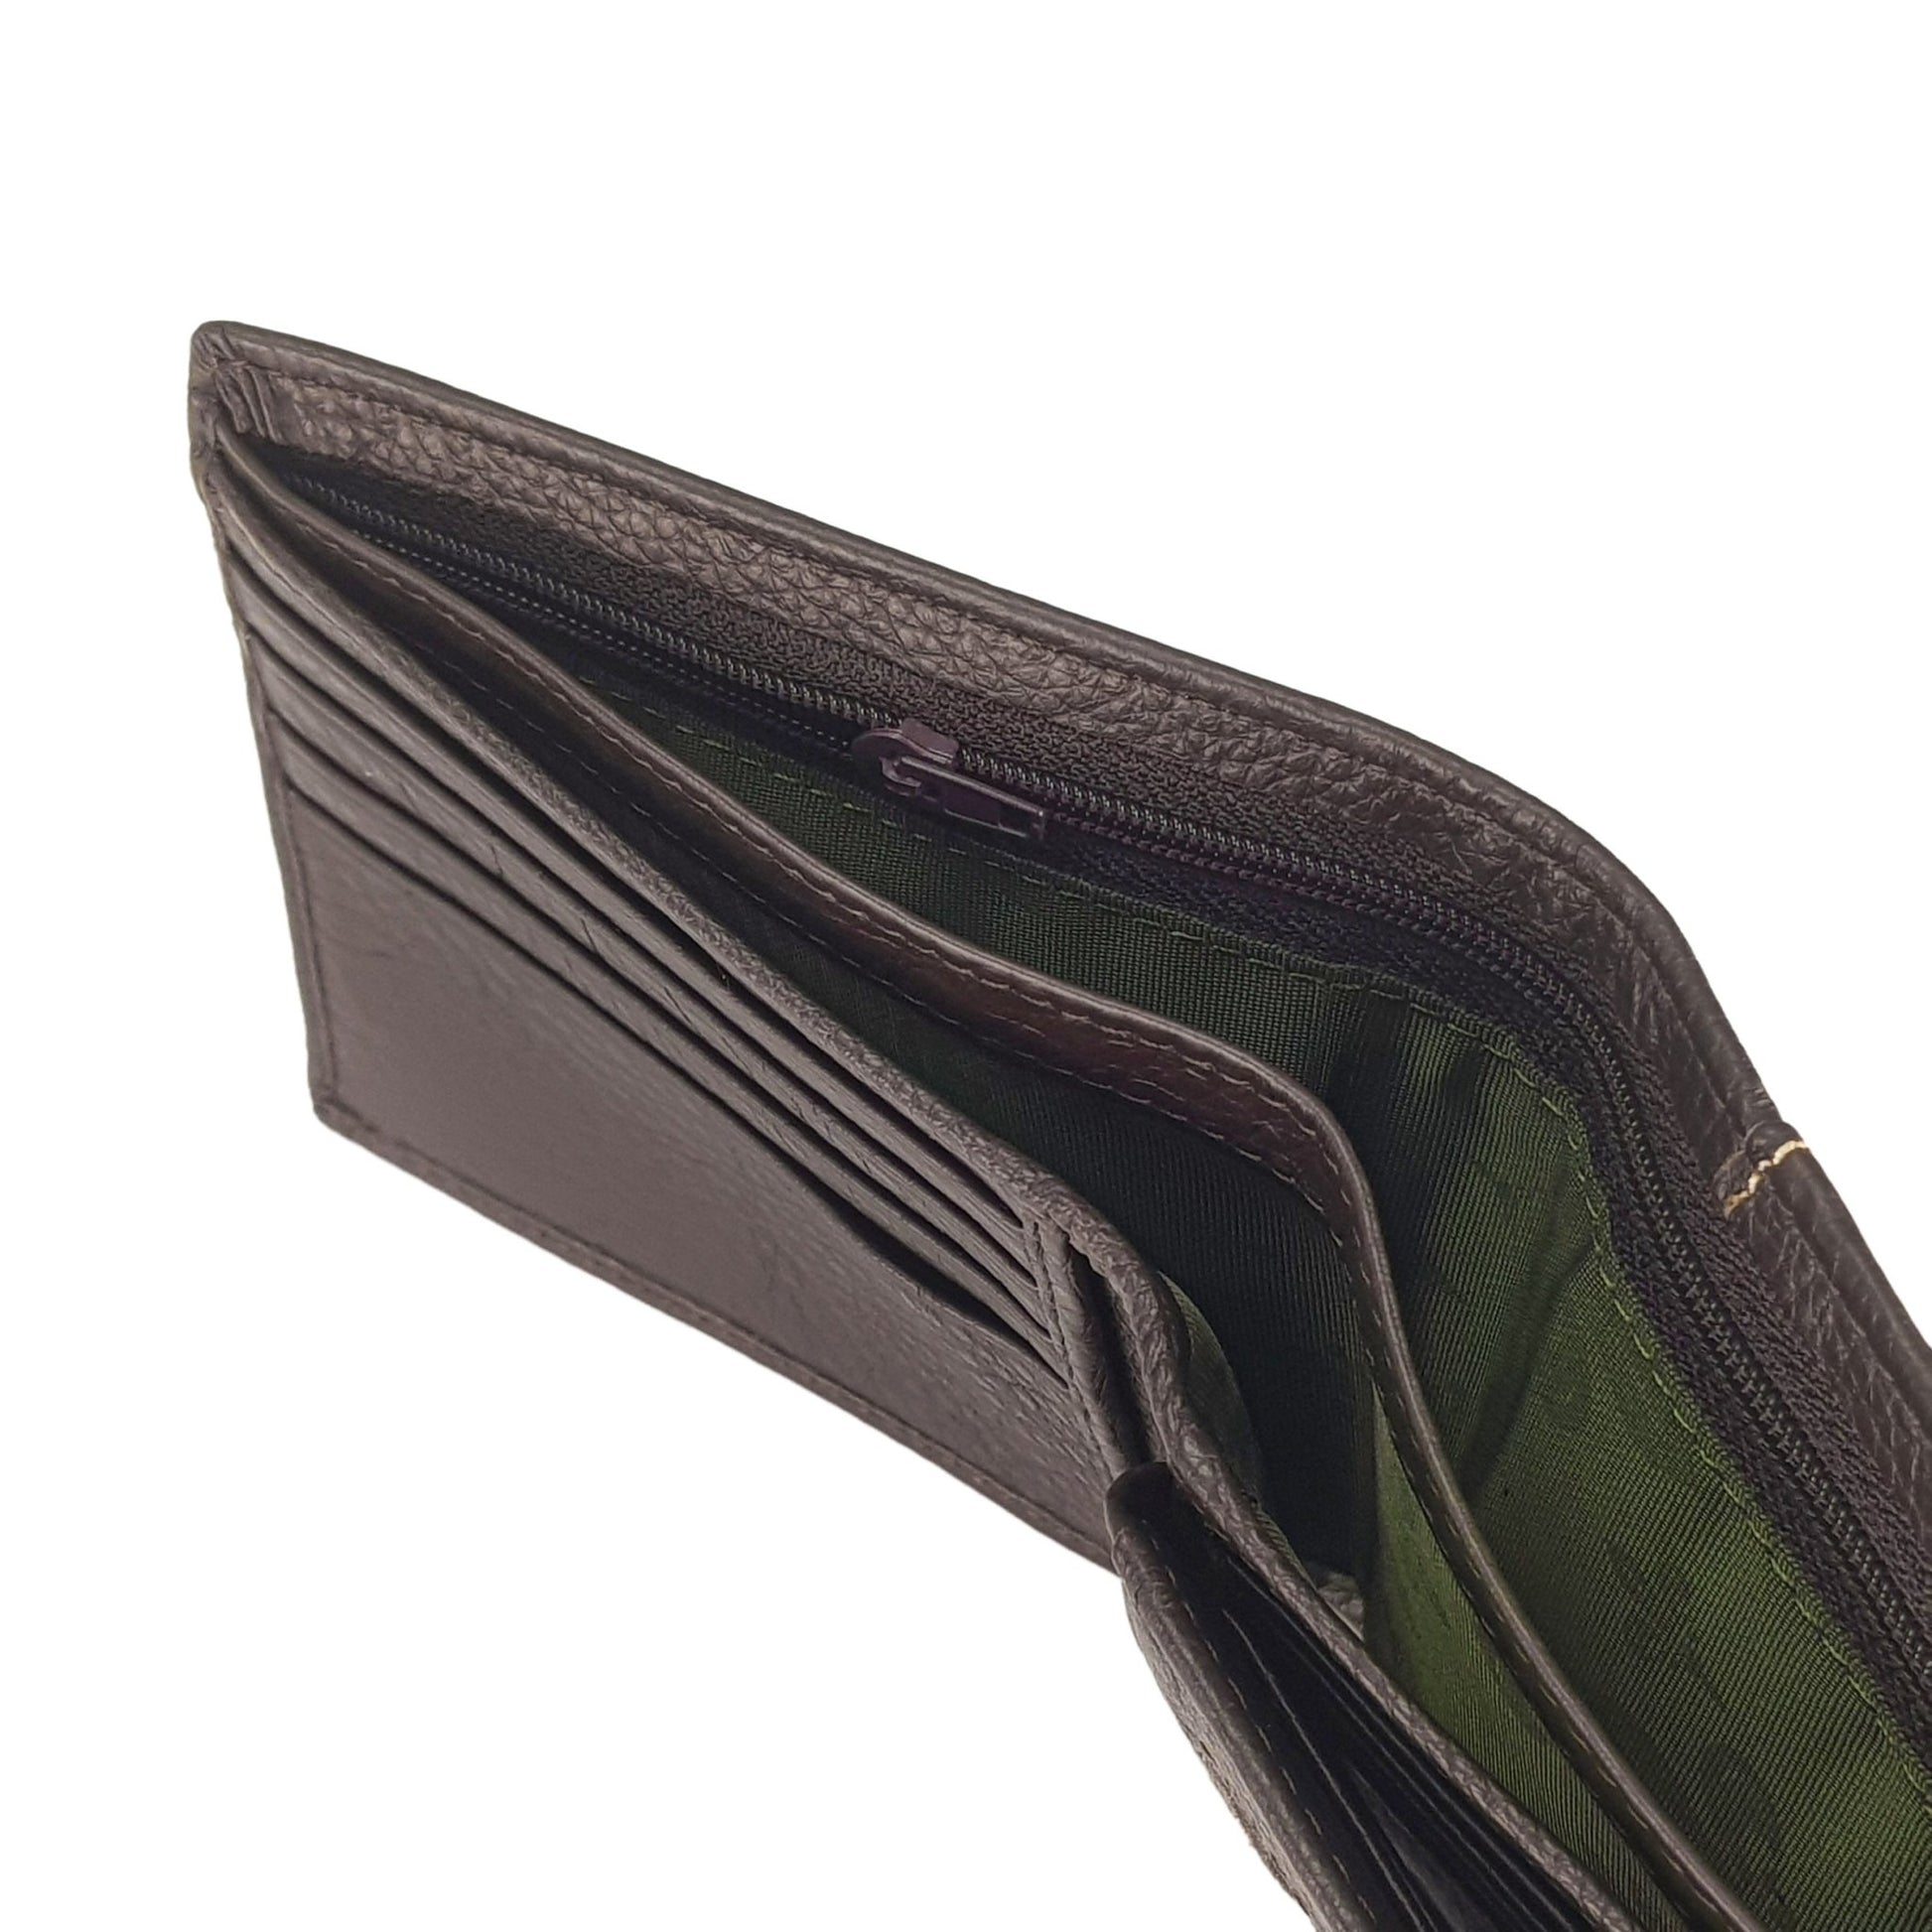 SEMPRE Mid-Flip Short Wallet - www.countryhide.com